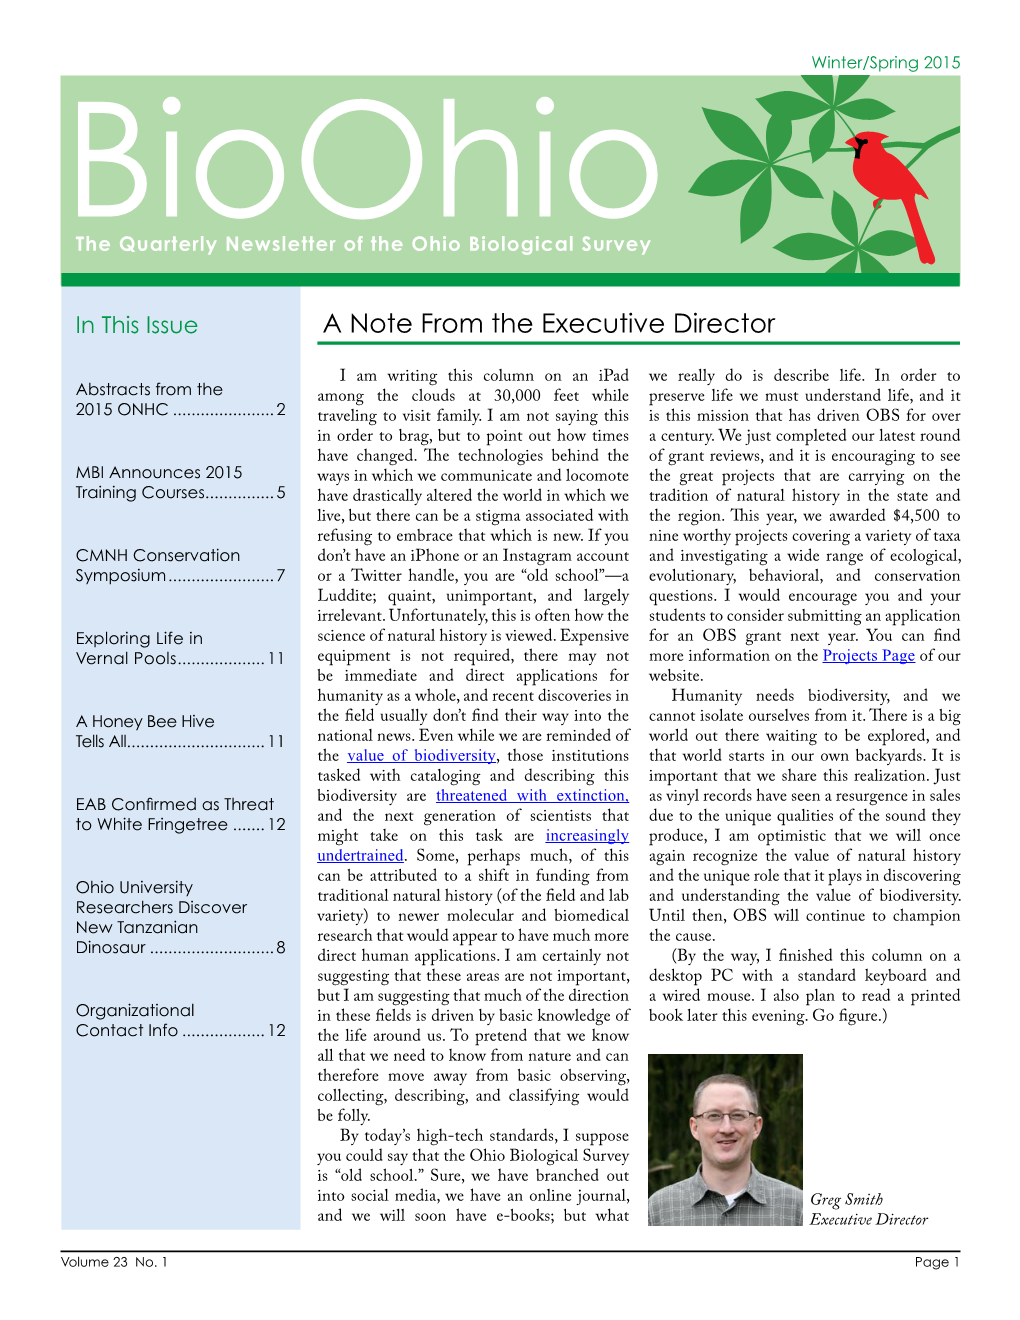 Winter/Spring 2015 Bioohio the Quarterly Newsletter of the Ohio Biological Survey